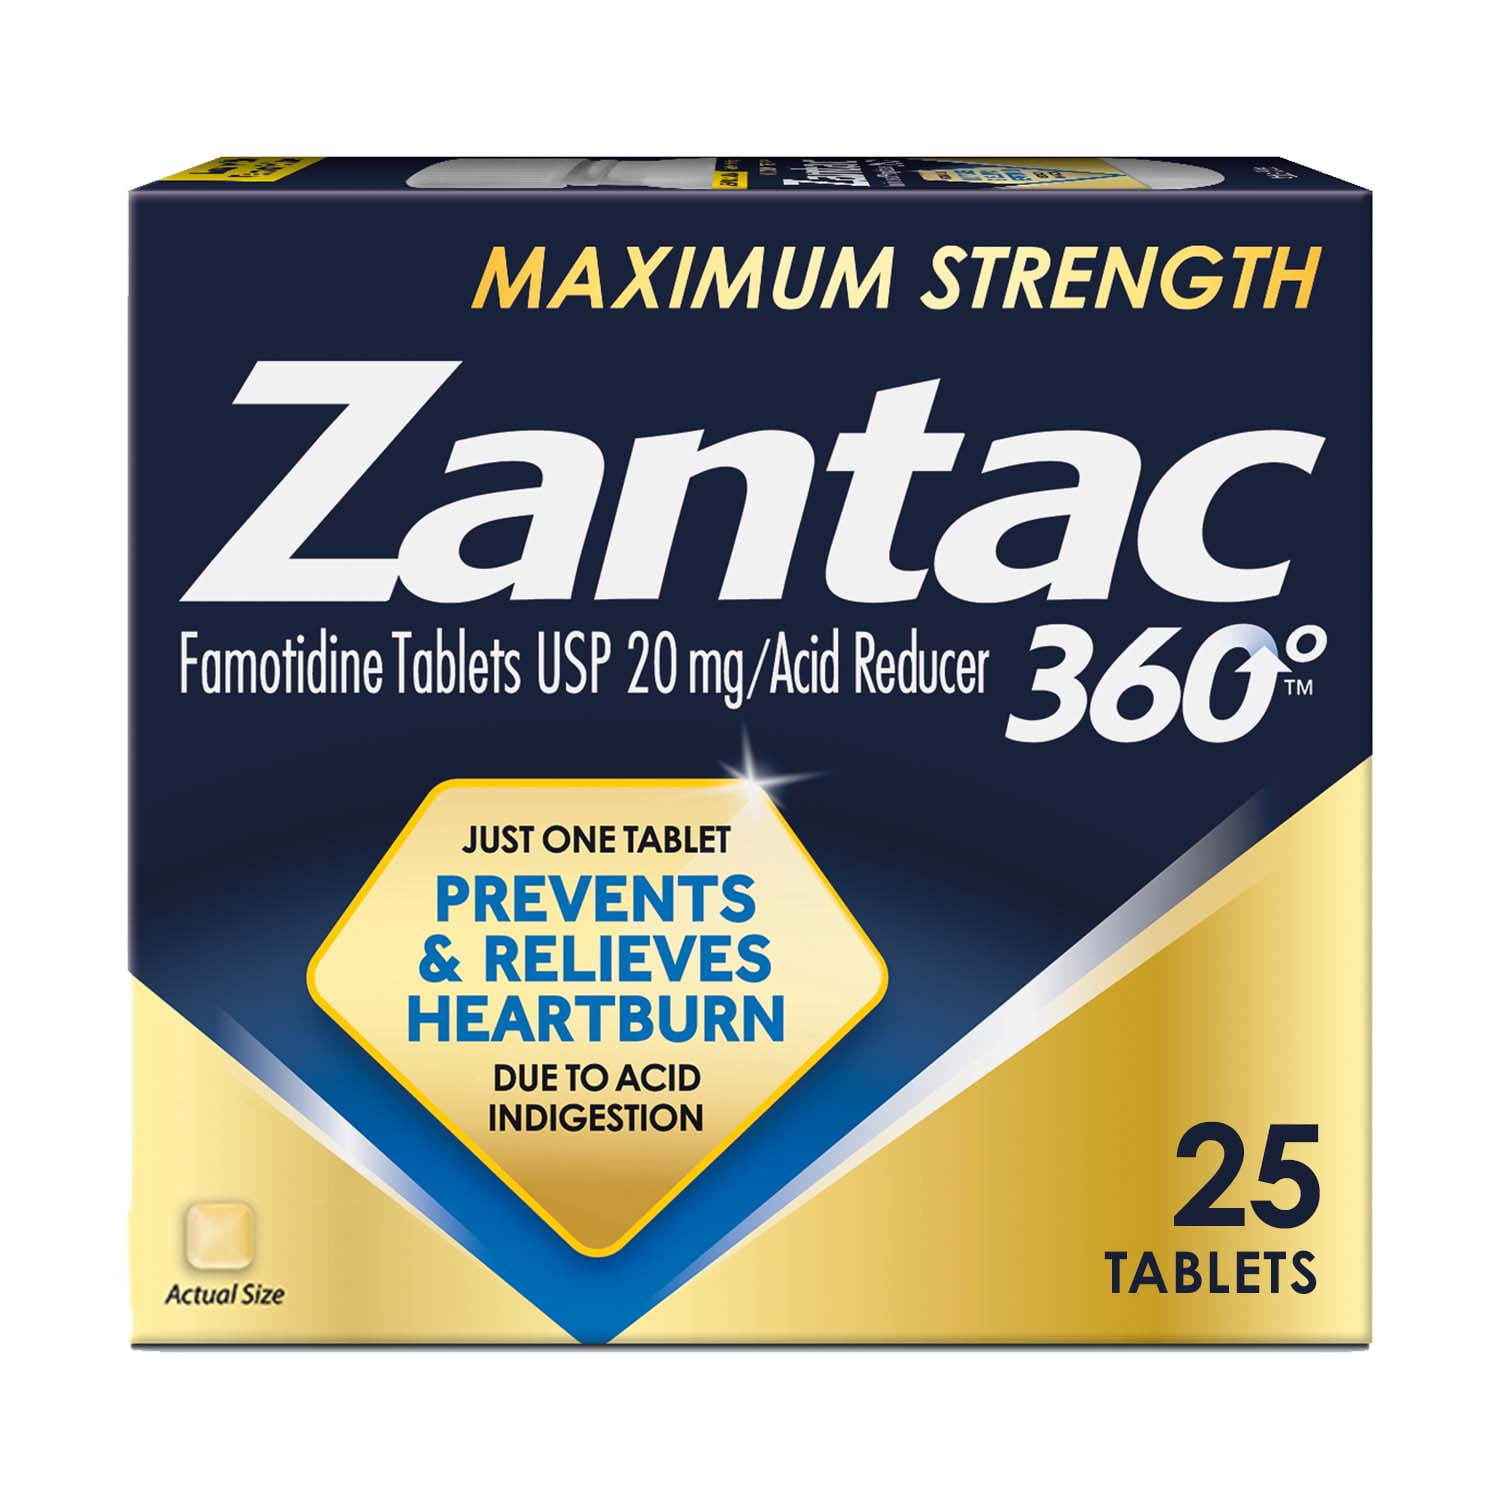 Zantac 360 Maximum Strength, Antacid Heartburn Prevention and Relief, 25 Tablets